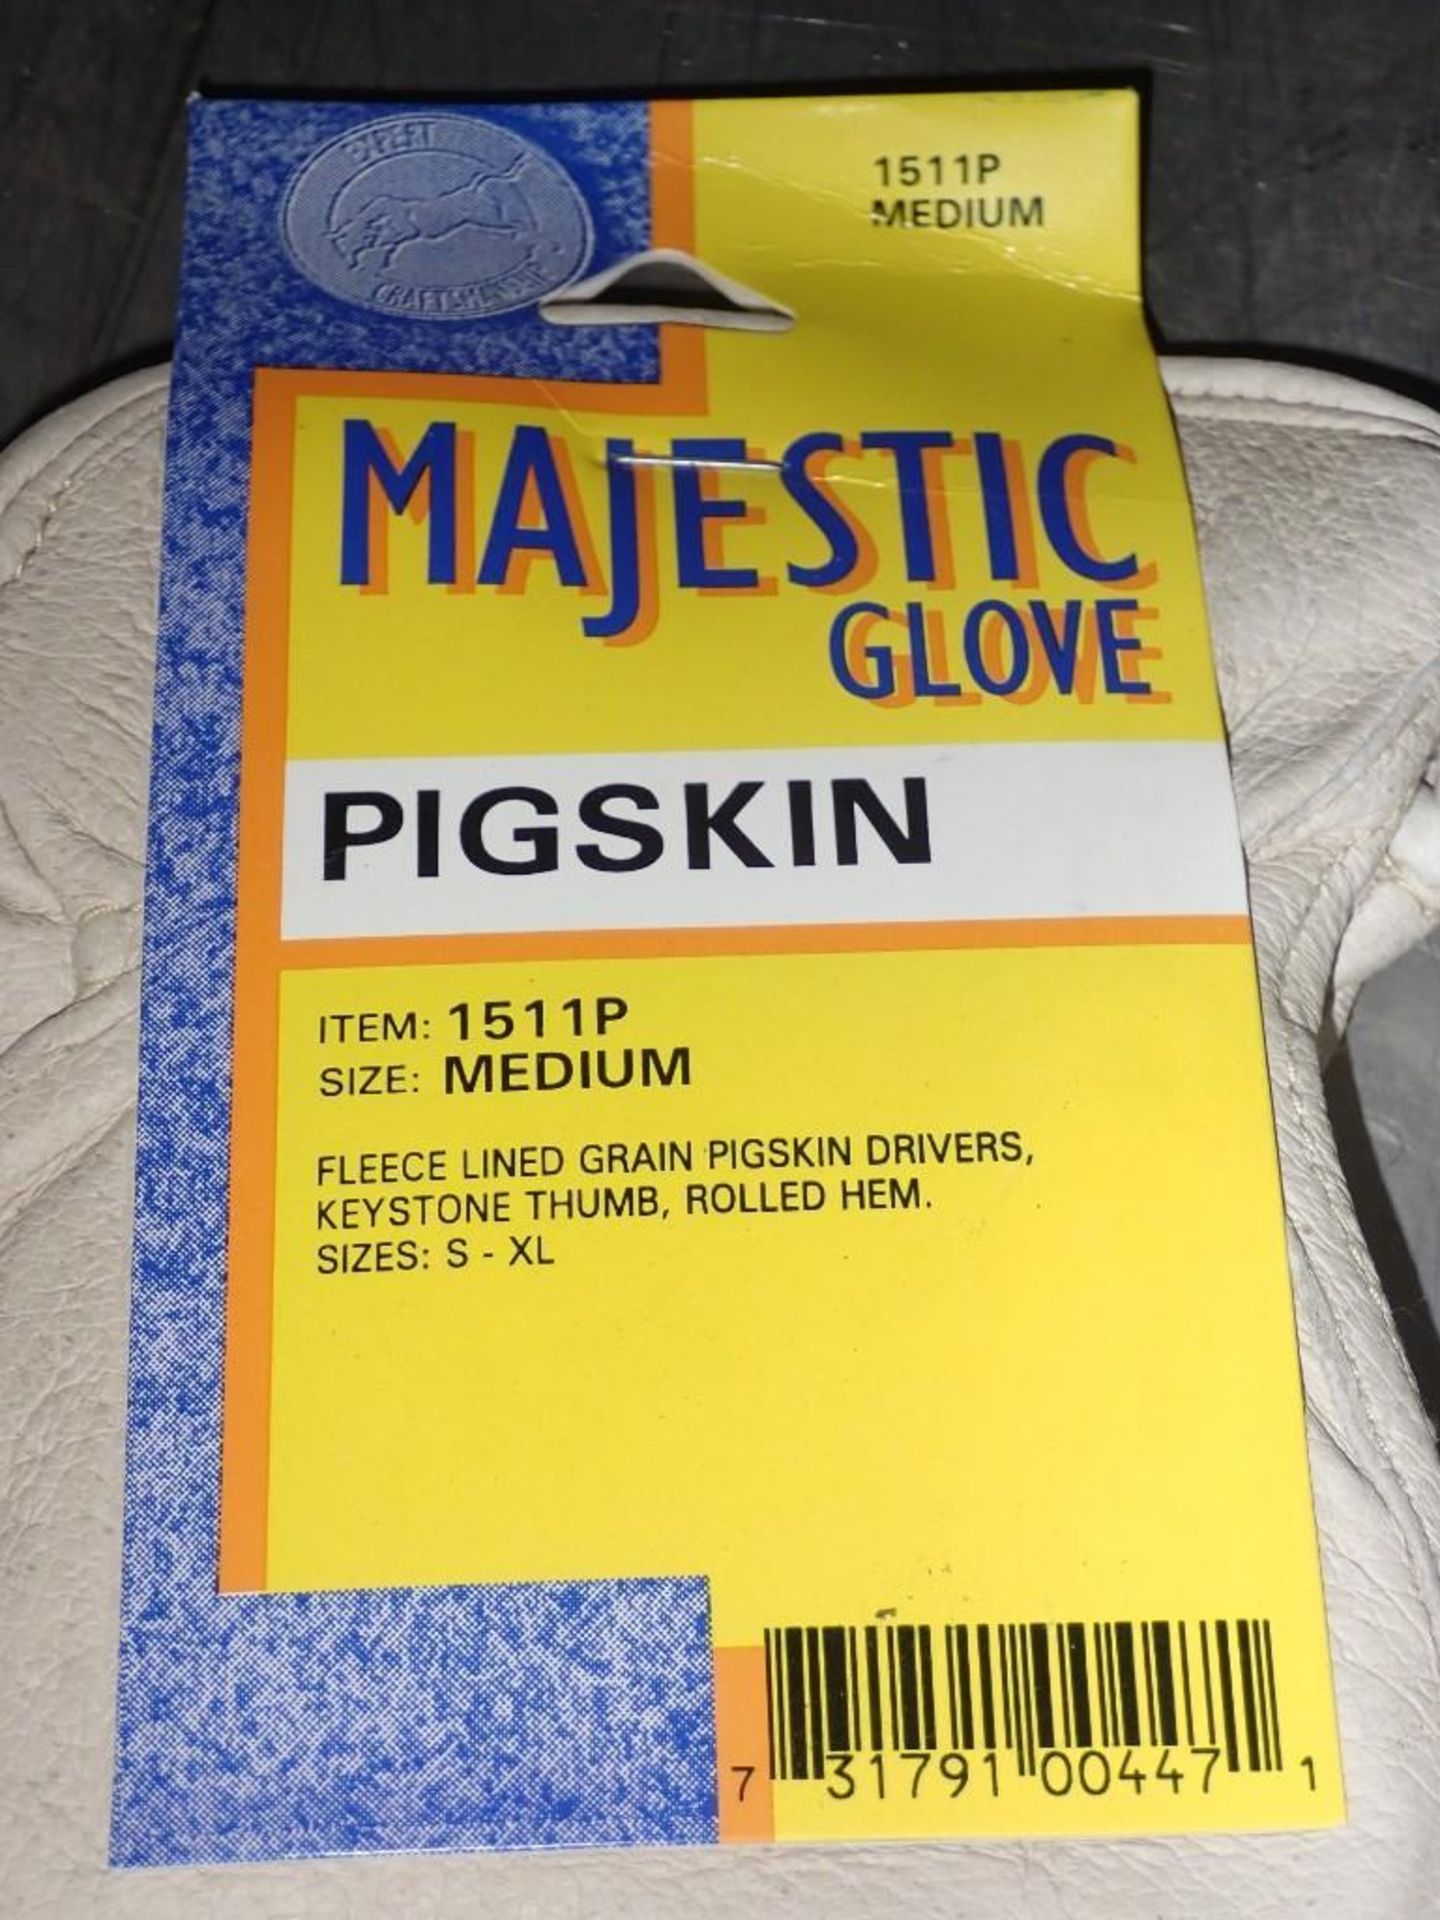 Lot of Majestic Pigskin Work Gloves - Image 2 of 2